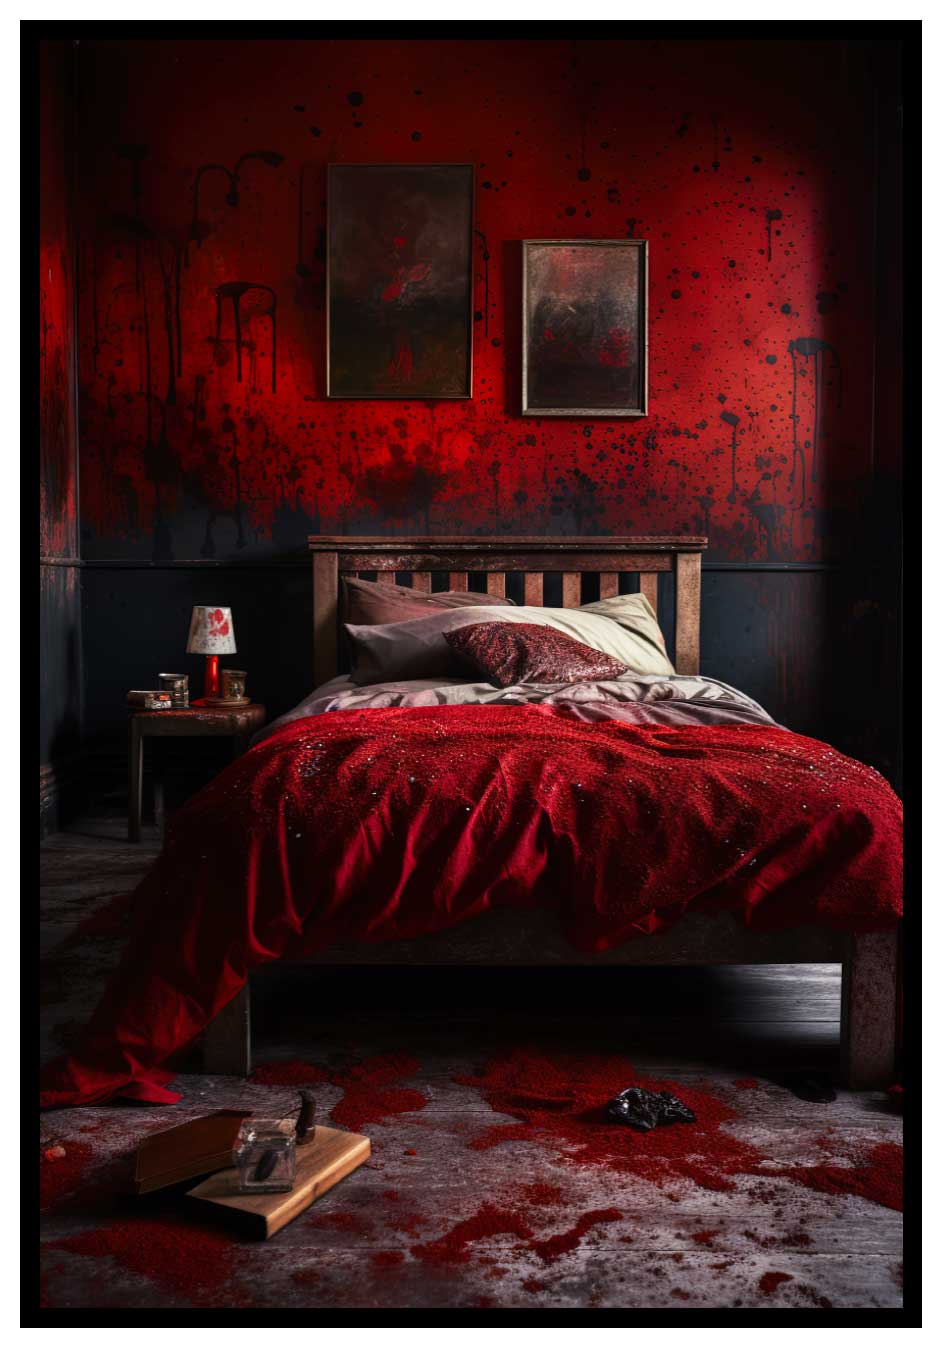 Killer Bedroom - Poster horror oscuro